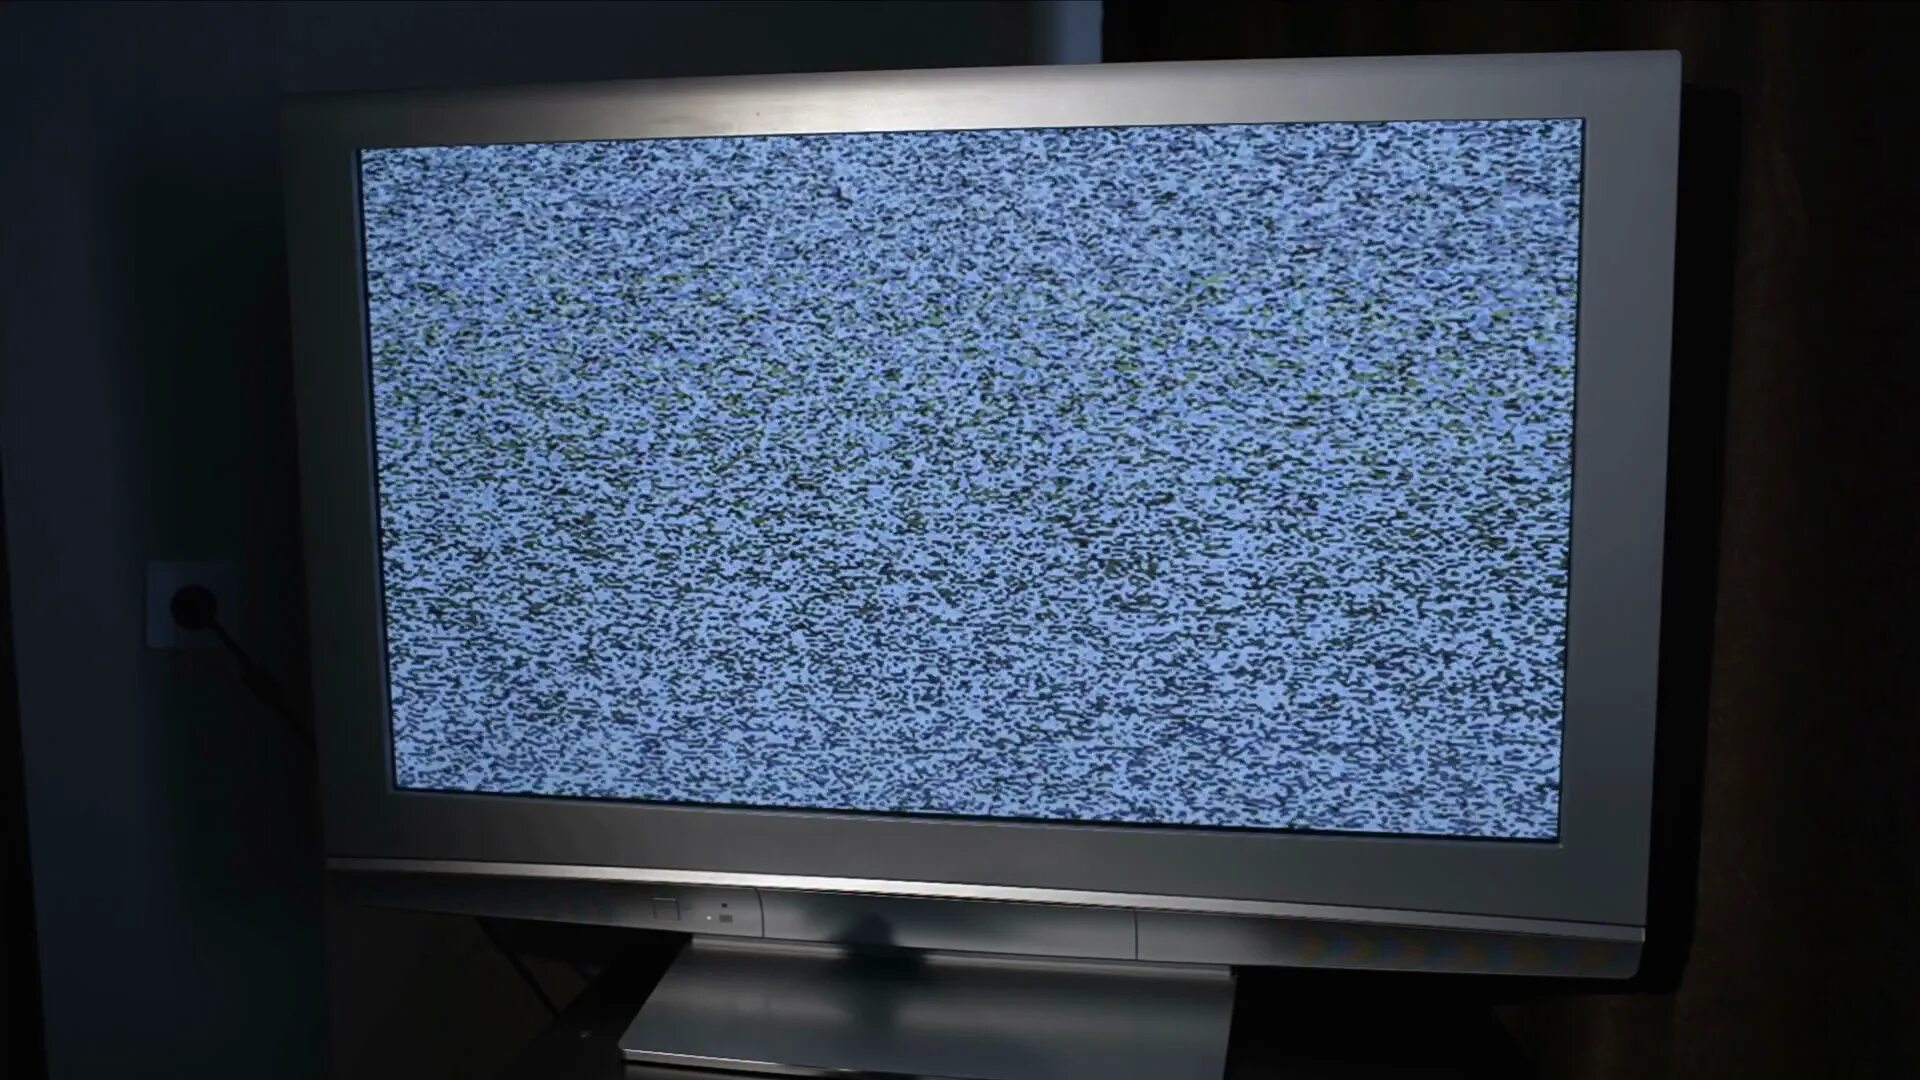 Монитор с помехами. Серый экран телевизора. Приближенный экран телевизора. Сломанный экран телевизора.